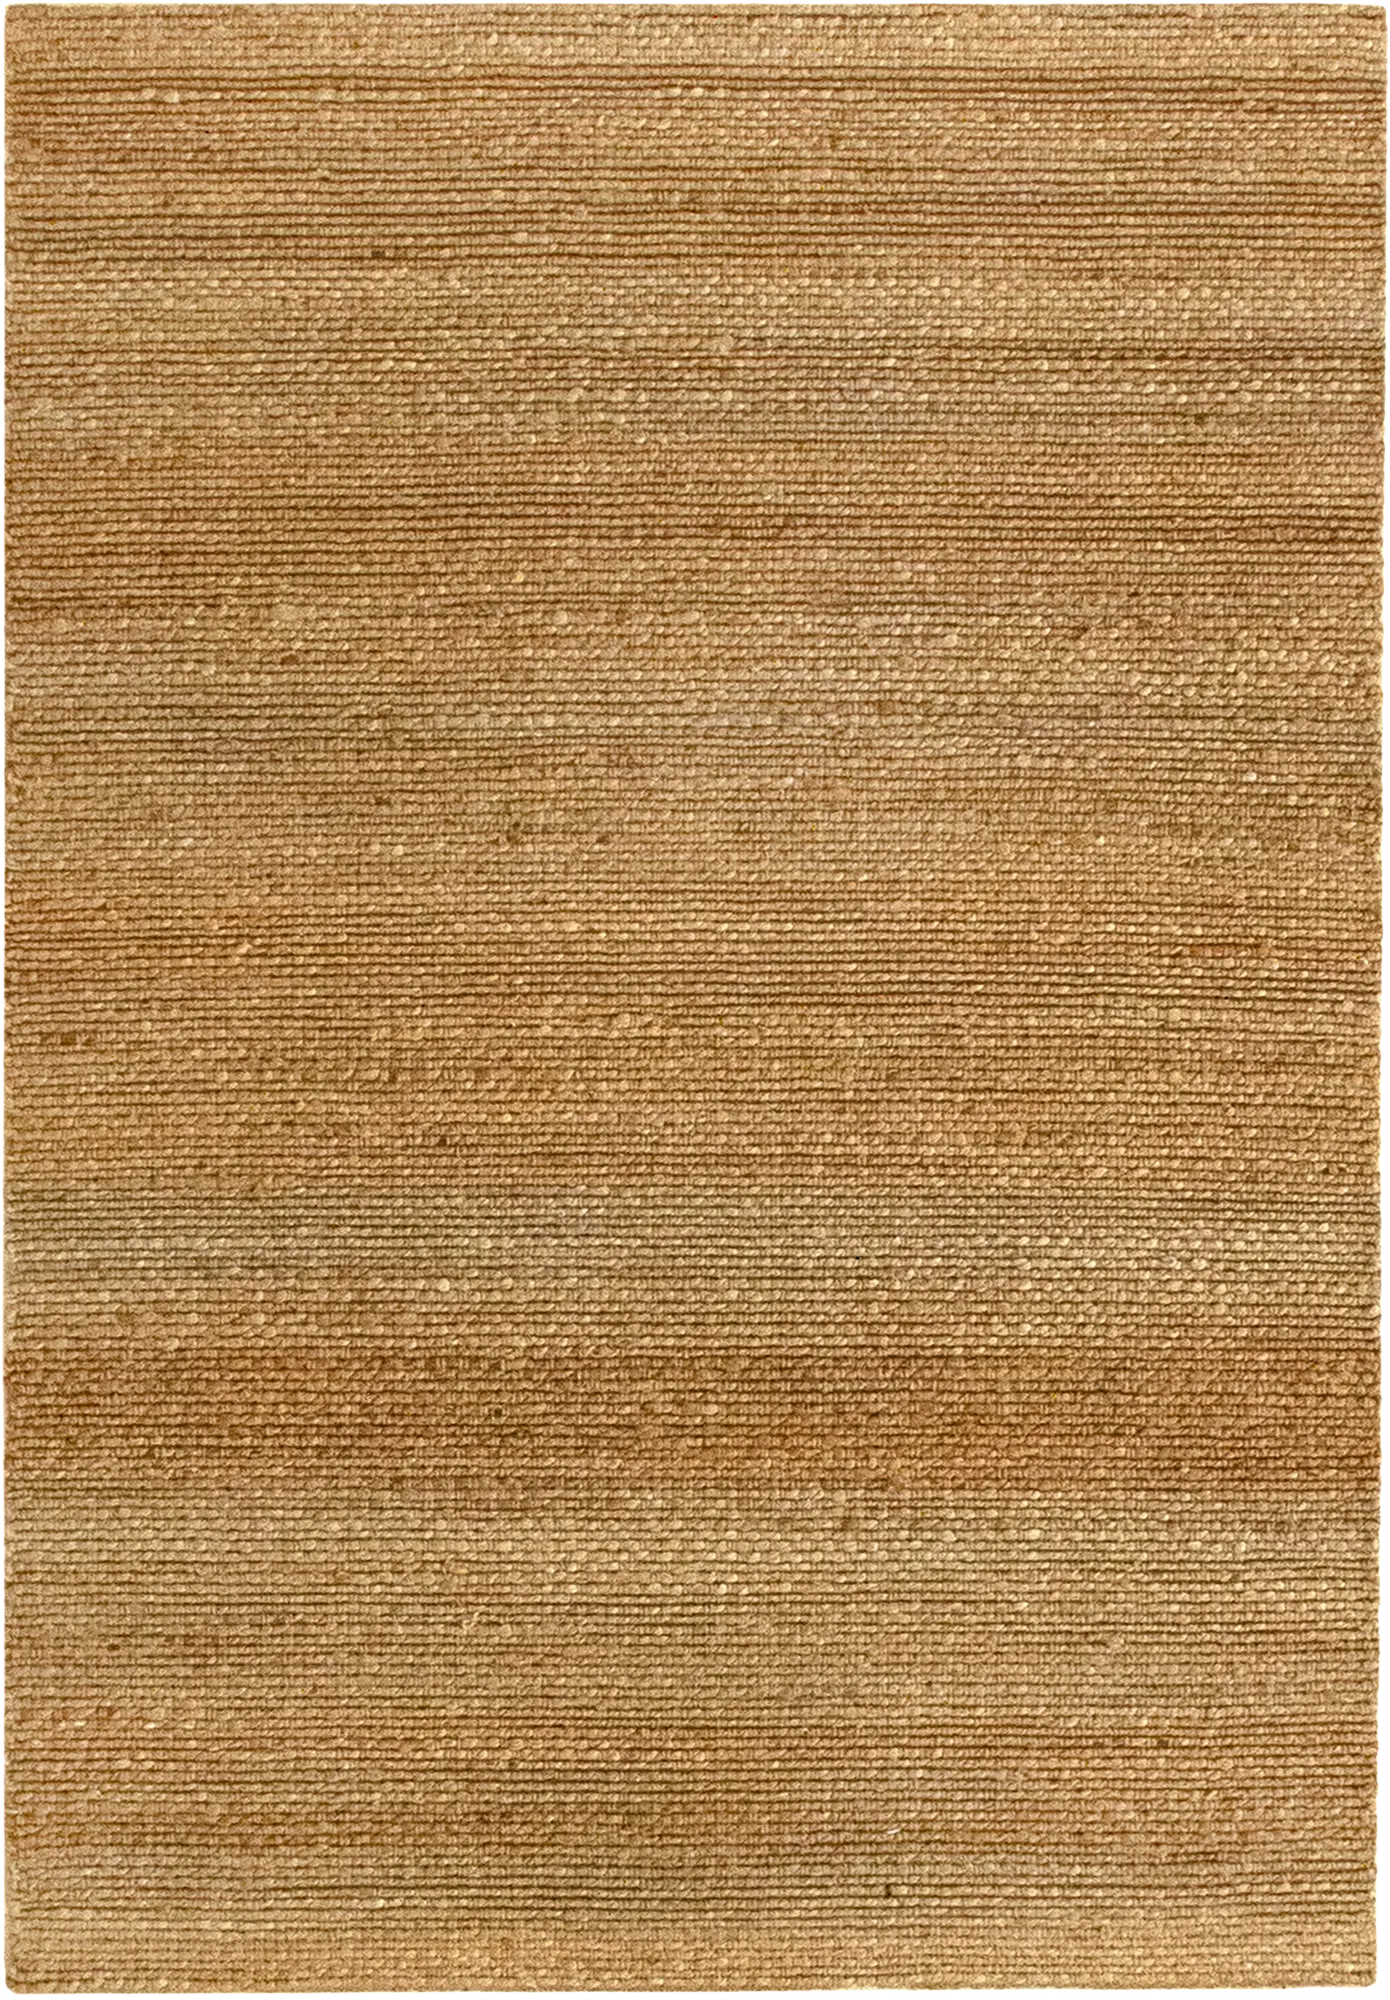 Alfombra yute giralda fibra natural 120x170cm